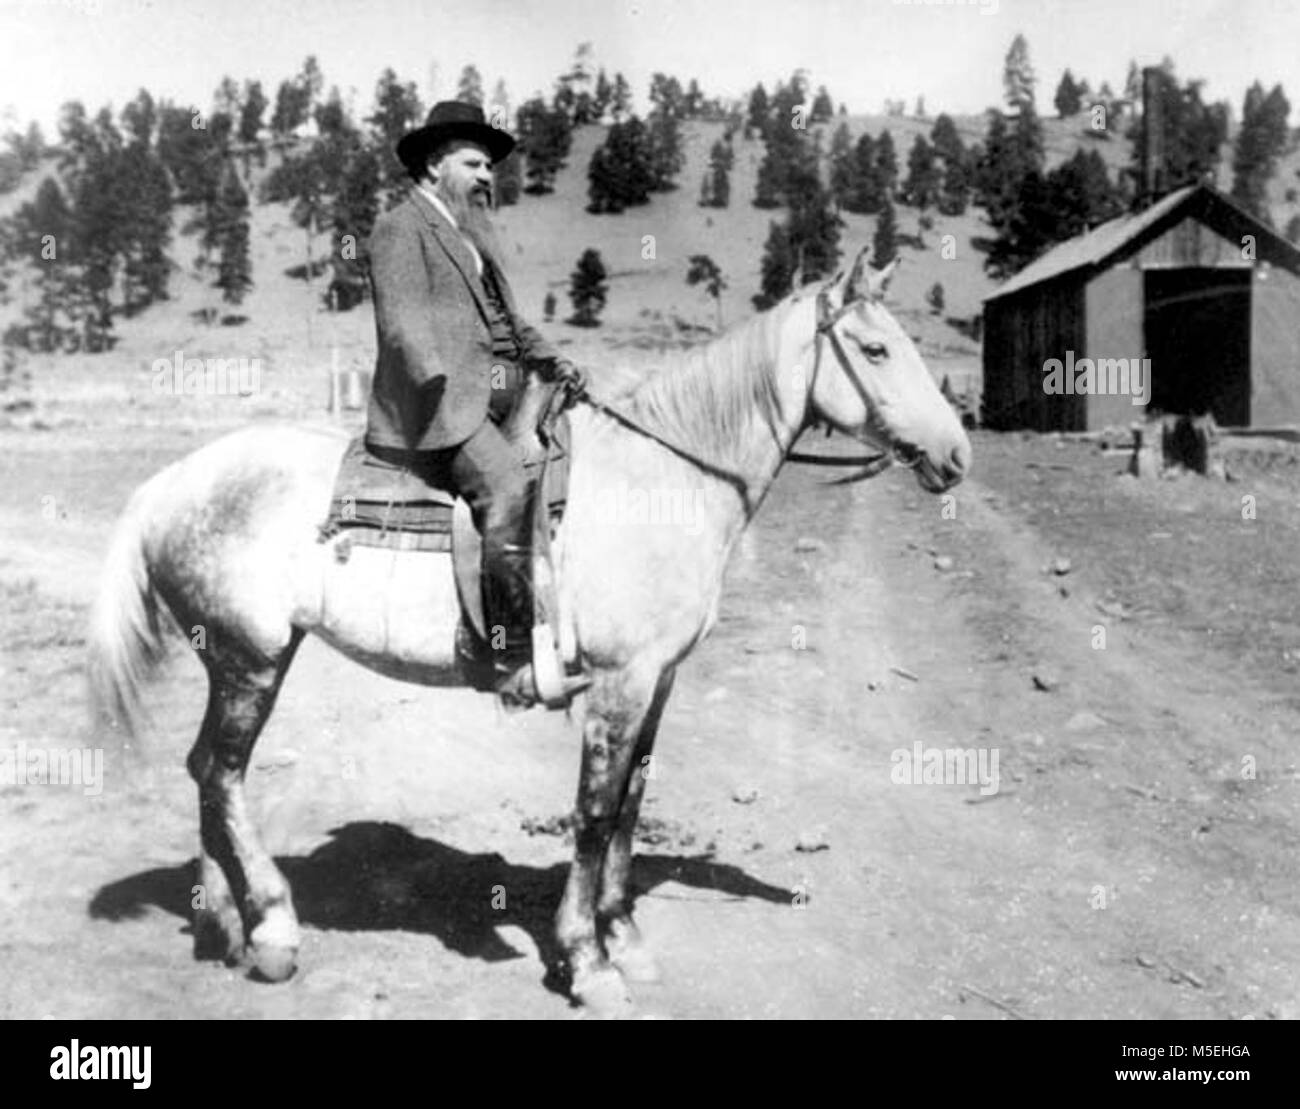 Grand Canyon Powell Expedition   PORTRAIT OF JOHN WESLEY POWELL (AGE 57) ON HORSEBACK NEAR FLAGSTAFF, ARIZONA, A GUEST OF D. M. RIORDAN. CIRCA 1891. Stock Photo